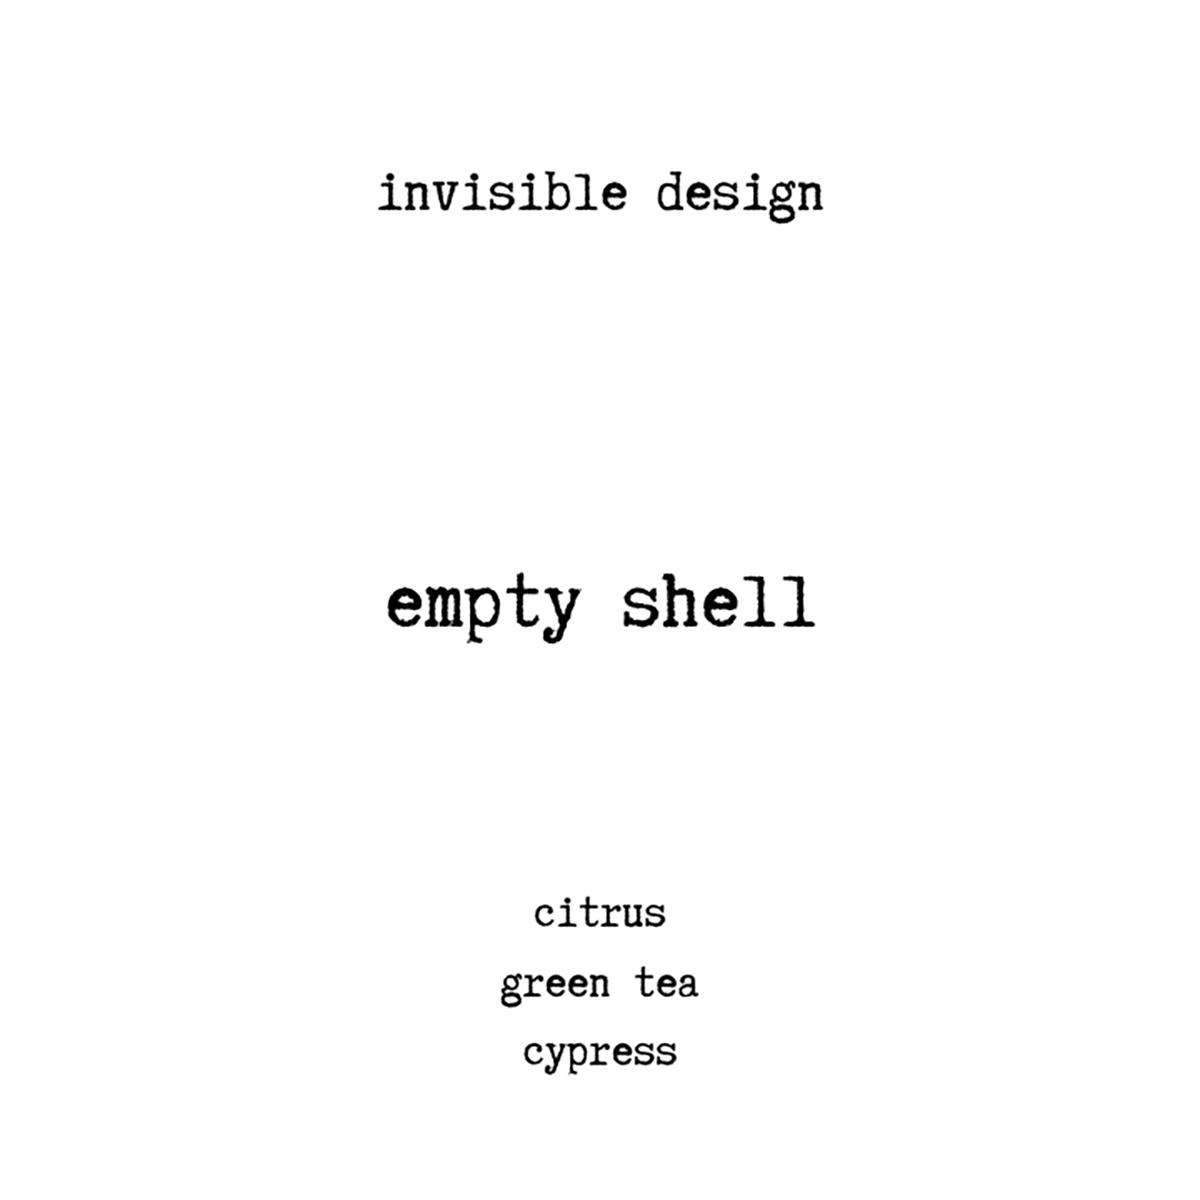 empty-shell_invisible-design_jk_20230524.jpg